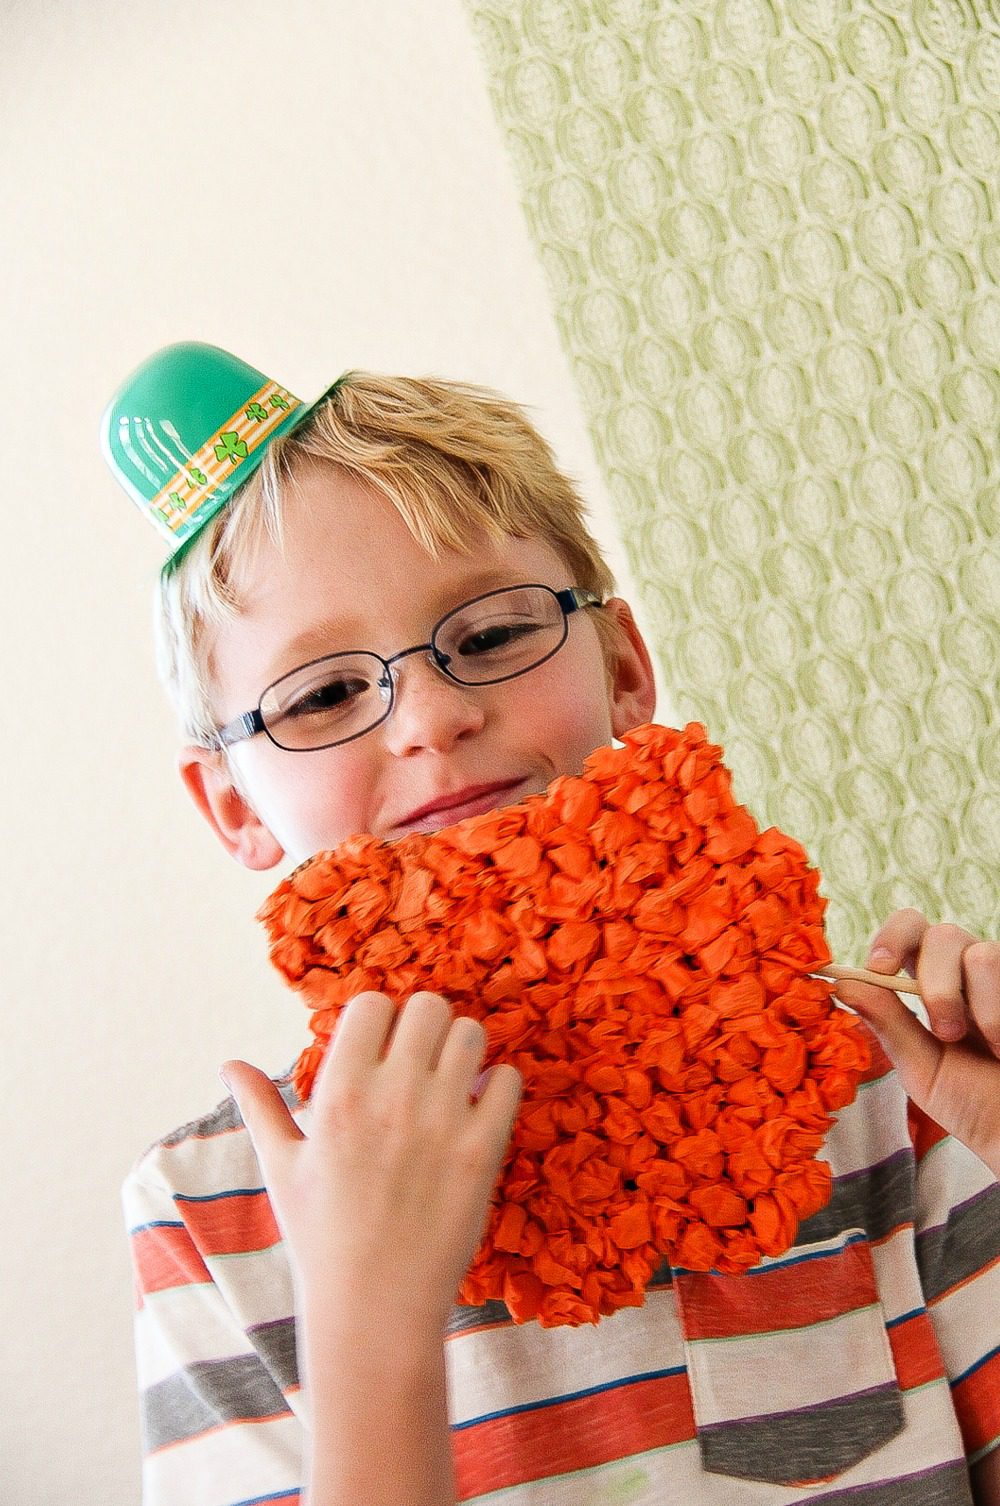 St. Patrick's Day Craft: DIY Leprechaun Beard